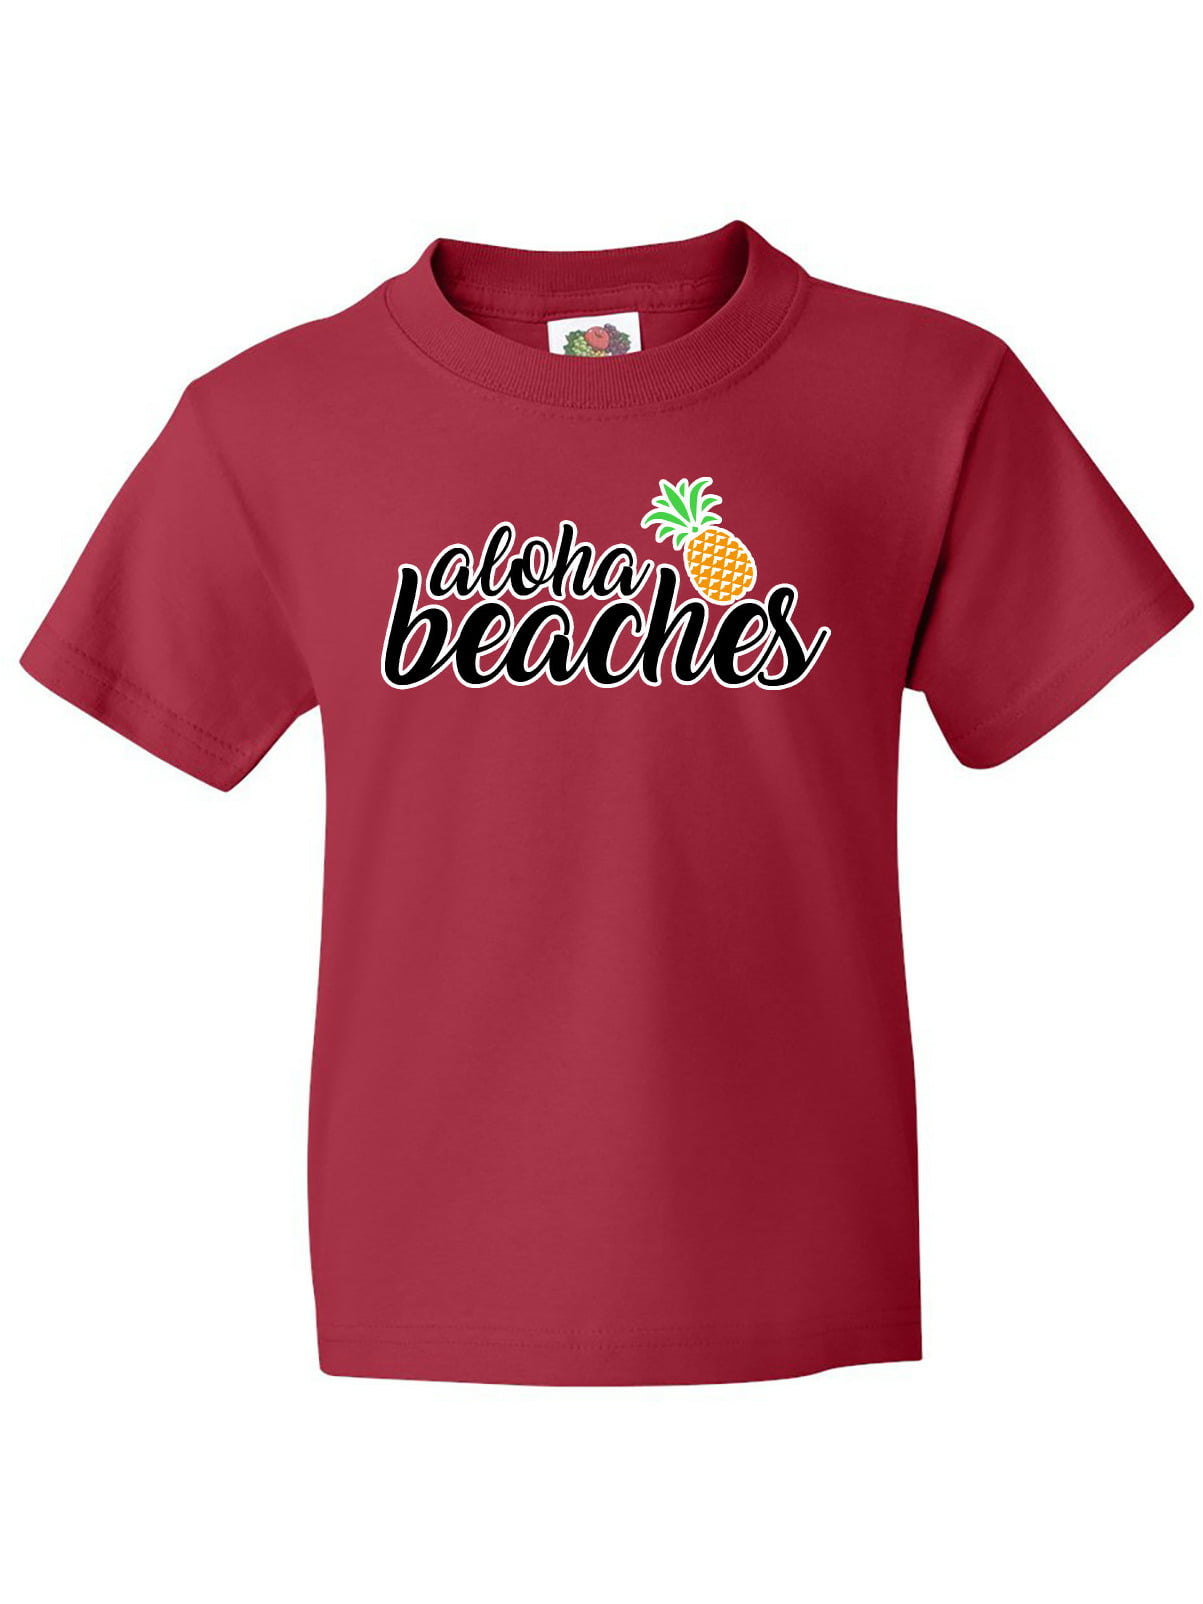 Aloha Pineapple Stripes Kids Cotton Blend T-Shirt Unisex